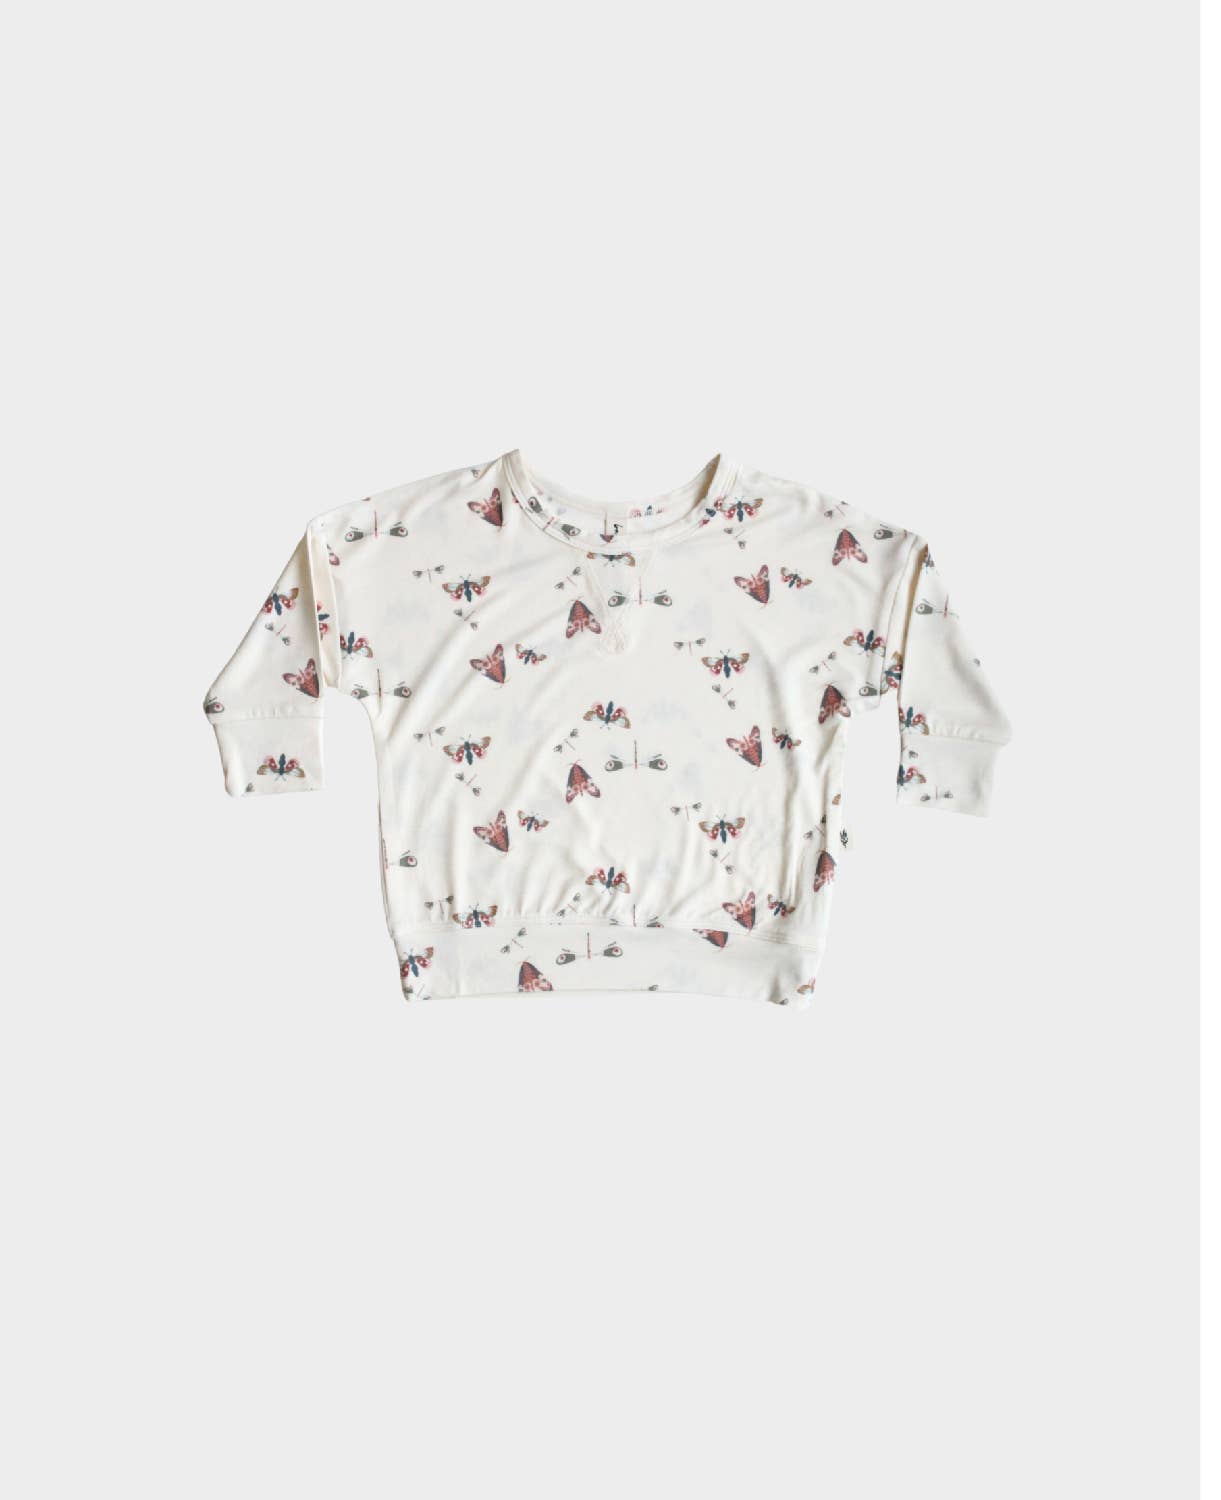 babysprouts clothing company - S23 D1: Girl's Drop-Shoulder Sweatshirt in Butterflies